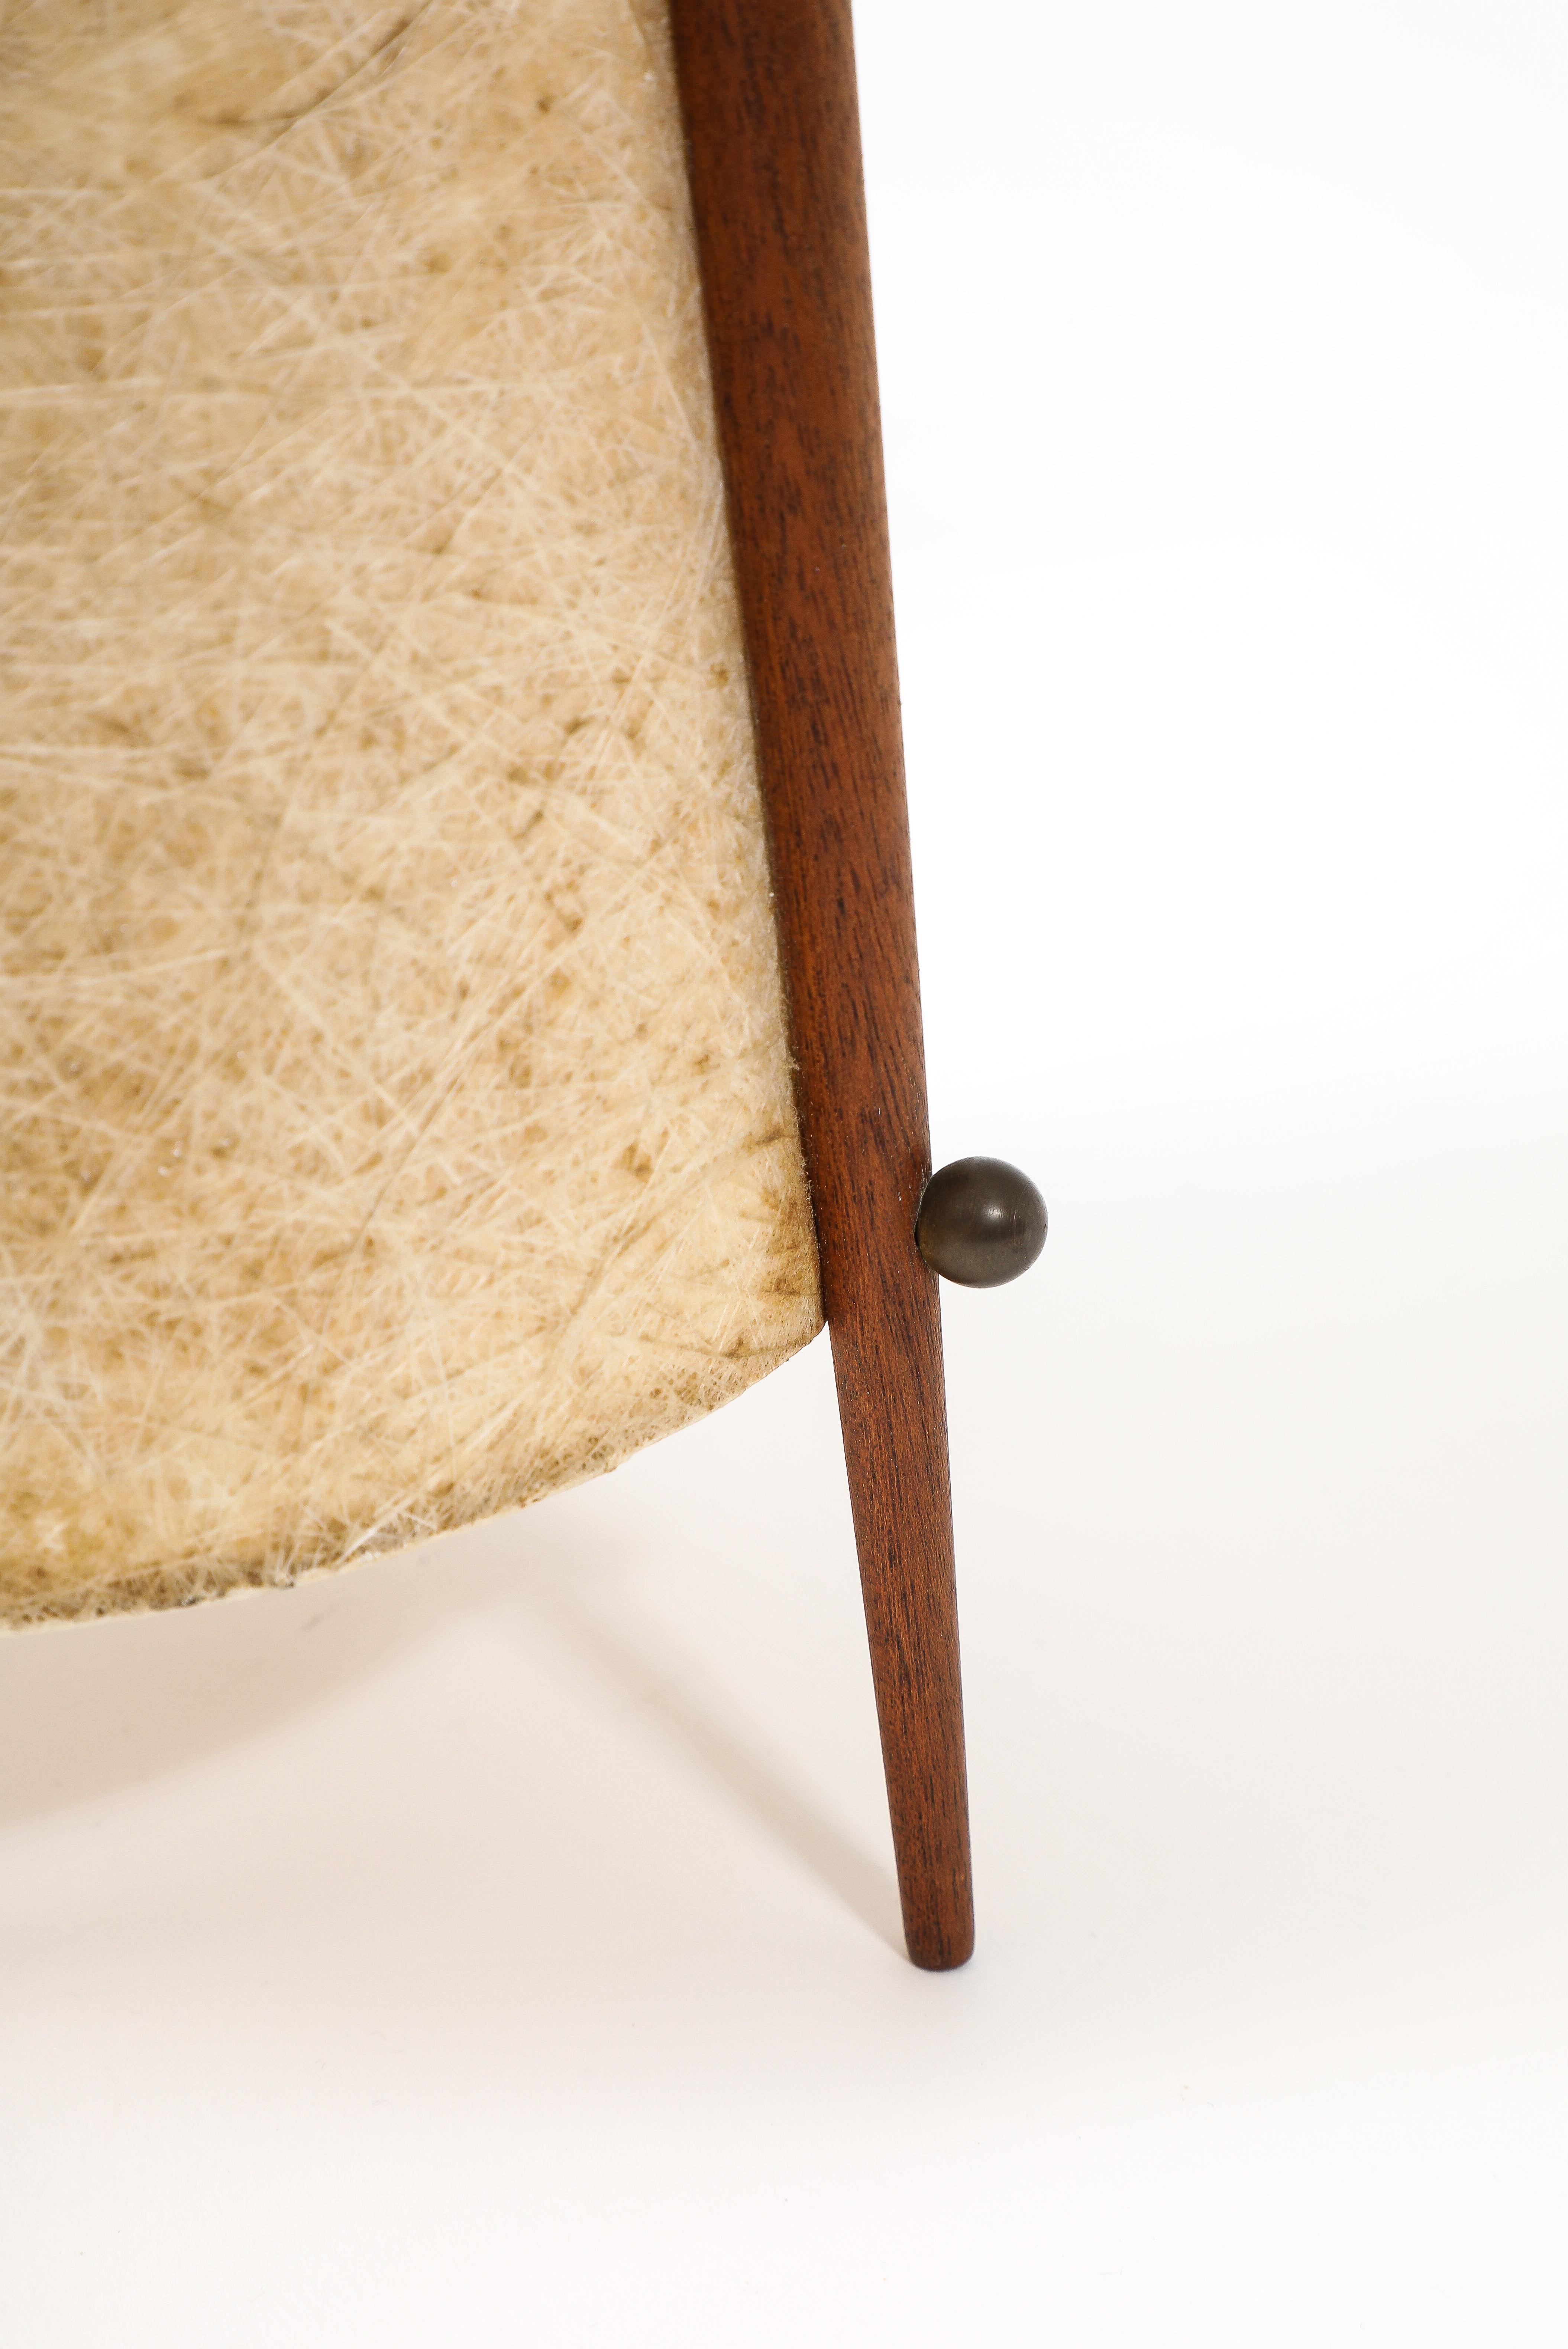 Mid-Century Modern Scandinavian Tripodal Teak & Paper Conical Table Lamp For Sale